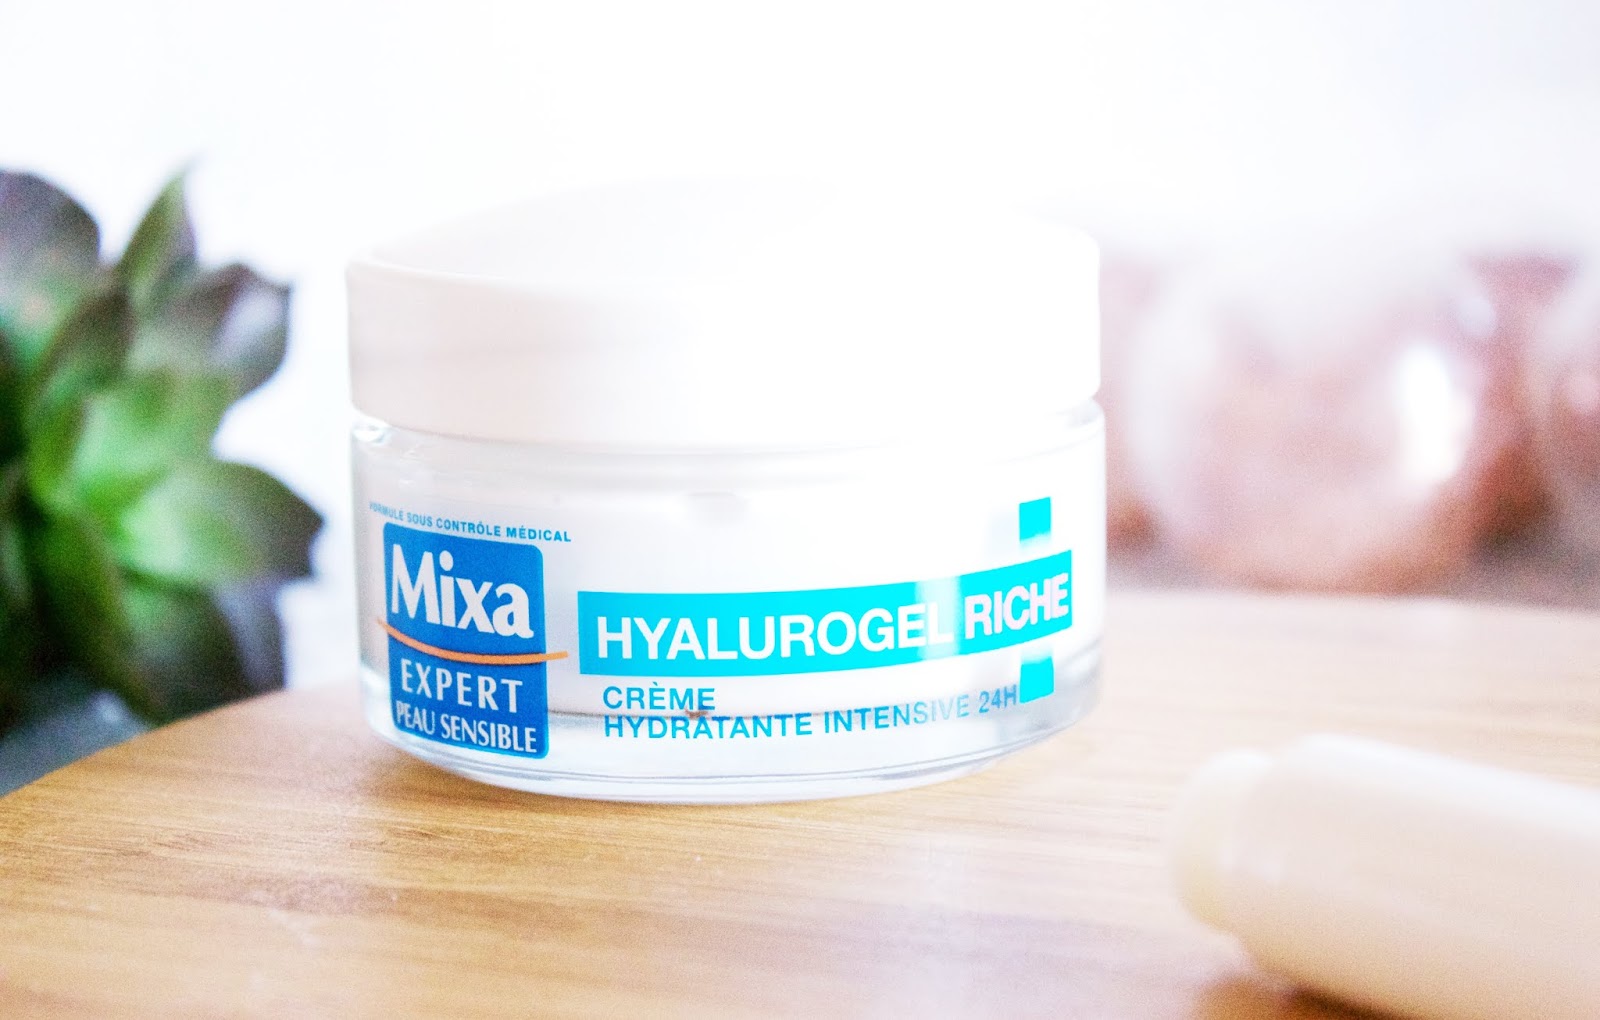 mixa-Creme-Hydratante-Intensive-24h-HYALUROGEL